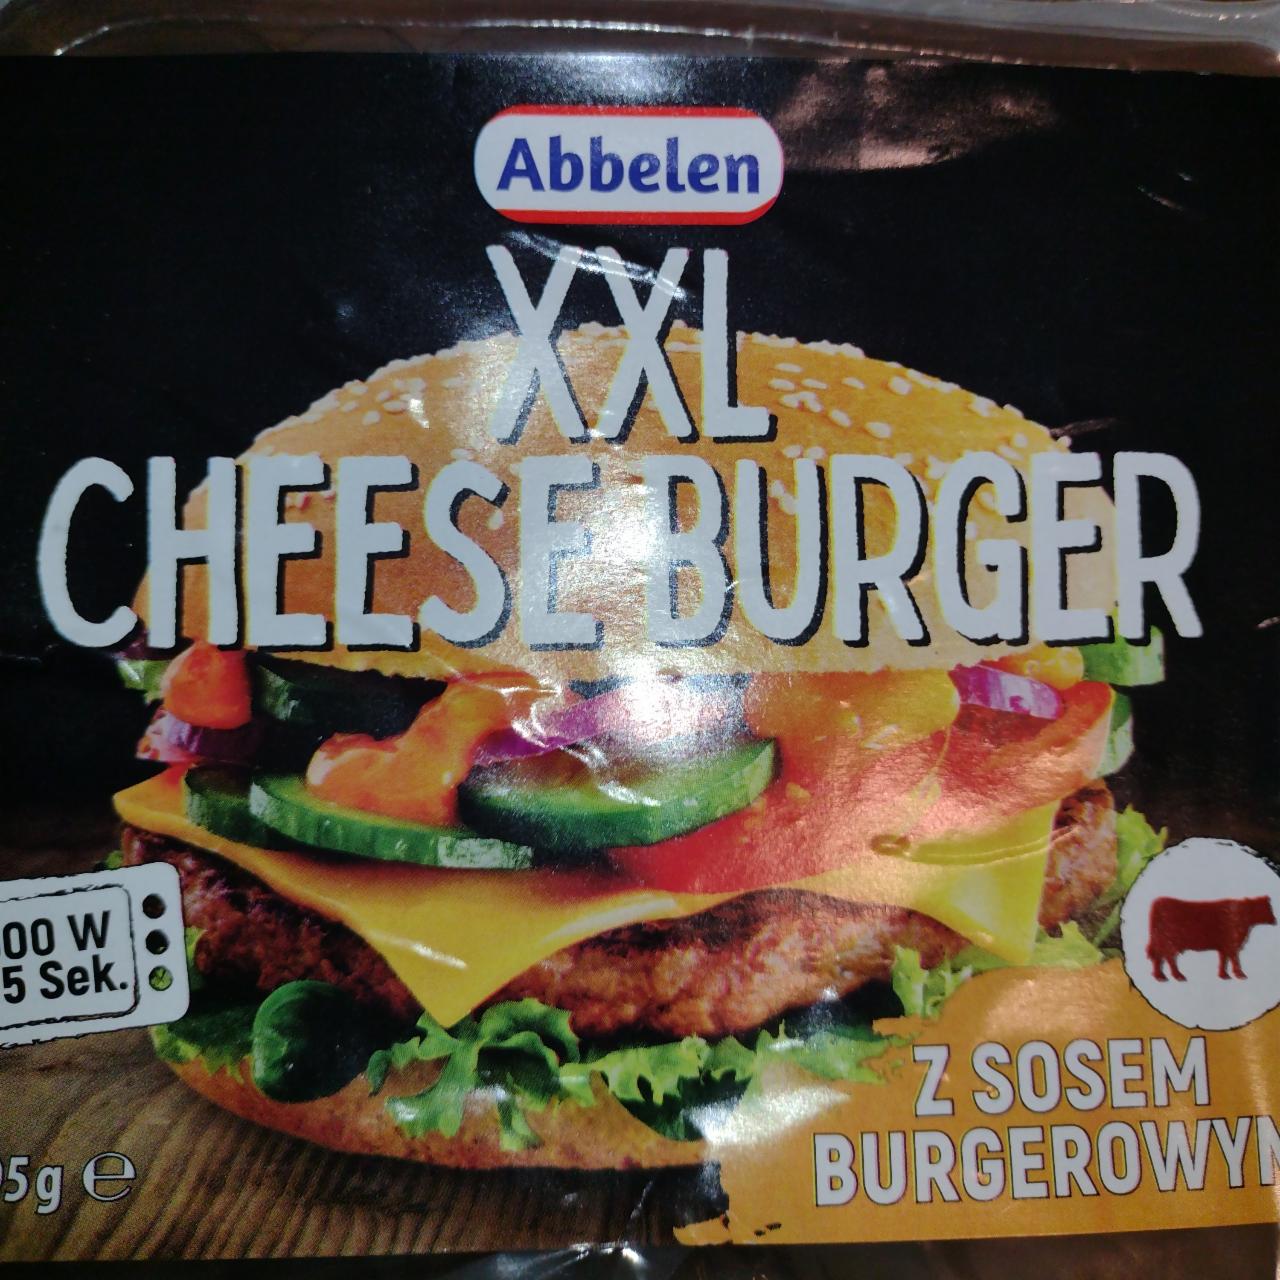 Zdjęcia - XXL Cheeseburger z sosem burgerowym Abbelen